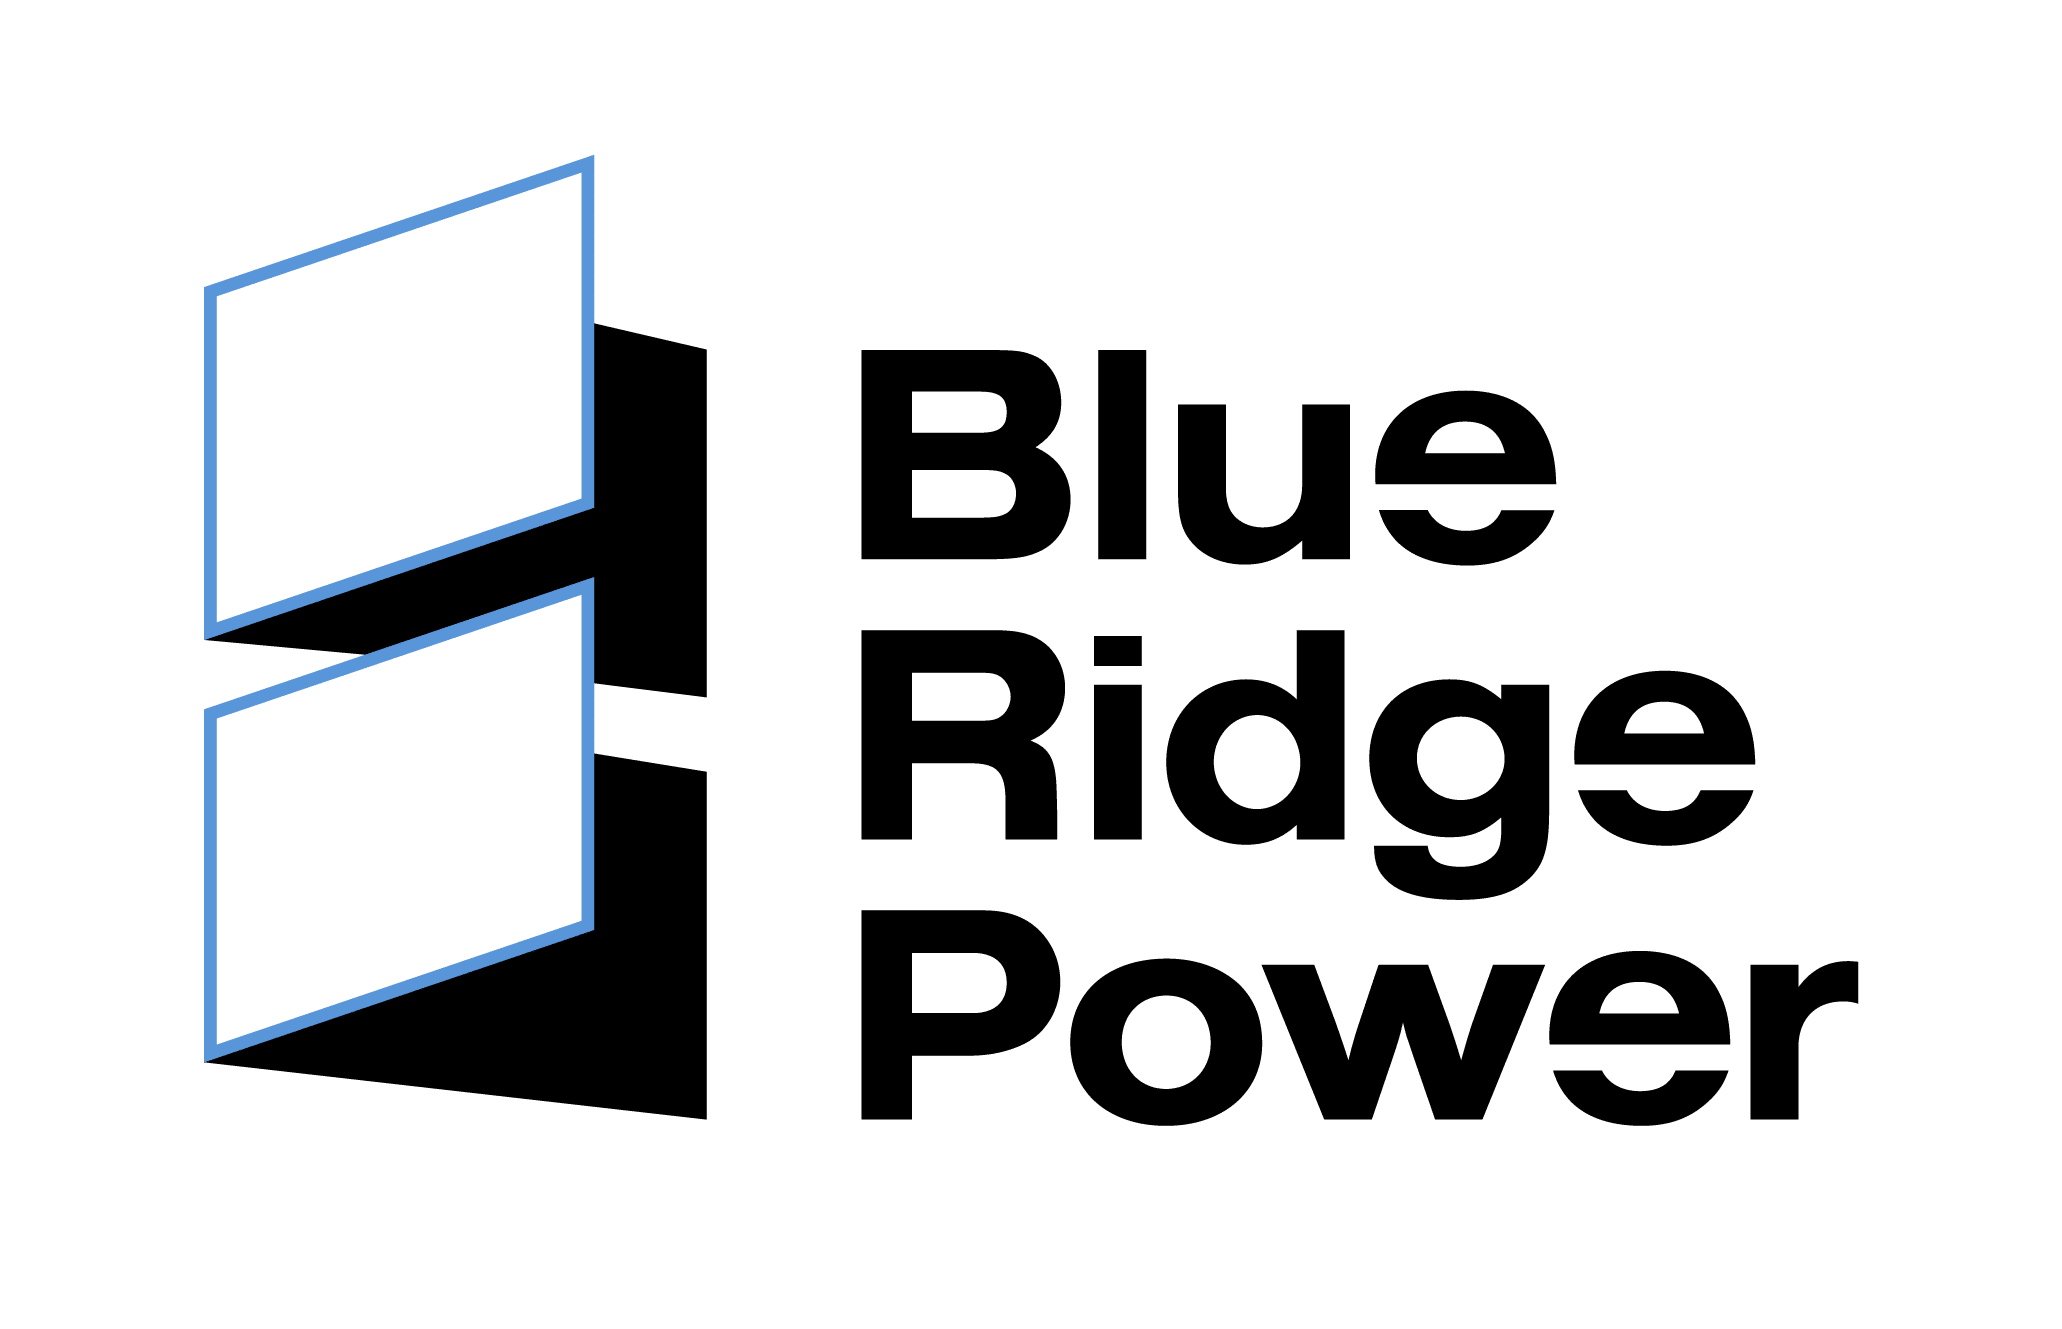 Blue Ridge Power